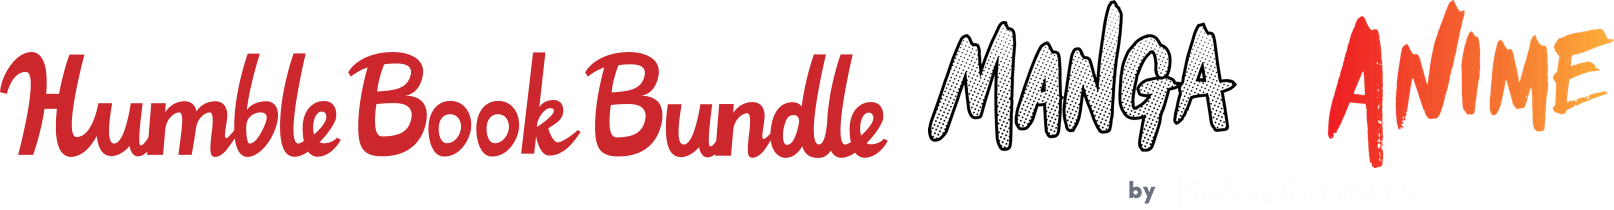 Humble Manga Bundle: Manga to Anime by Kodansha